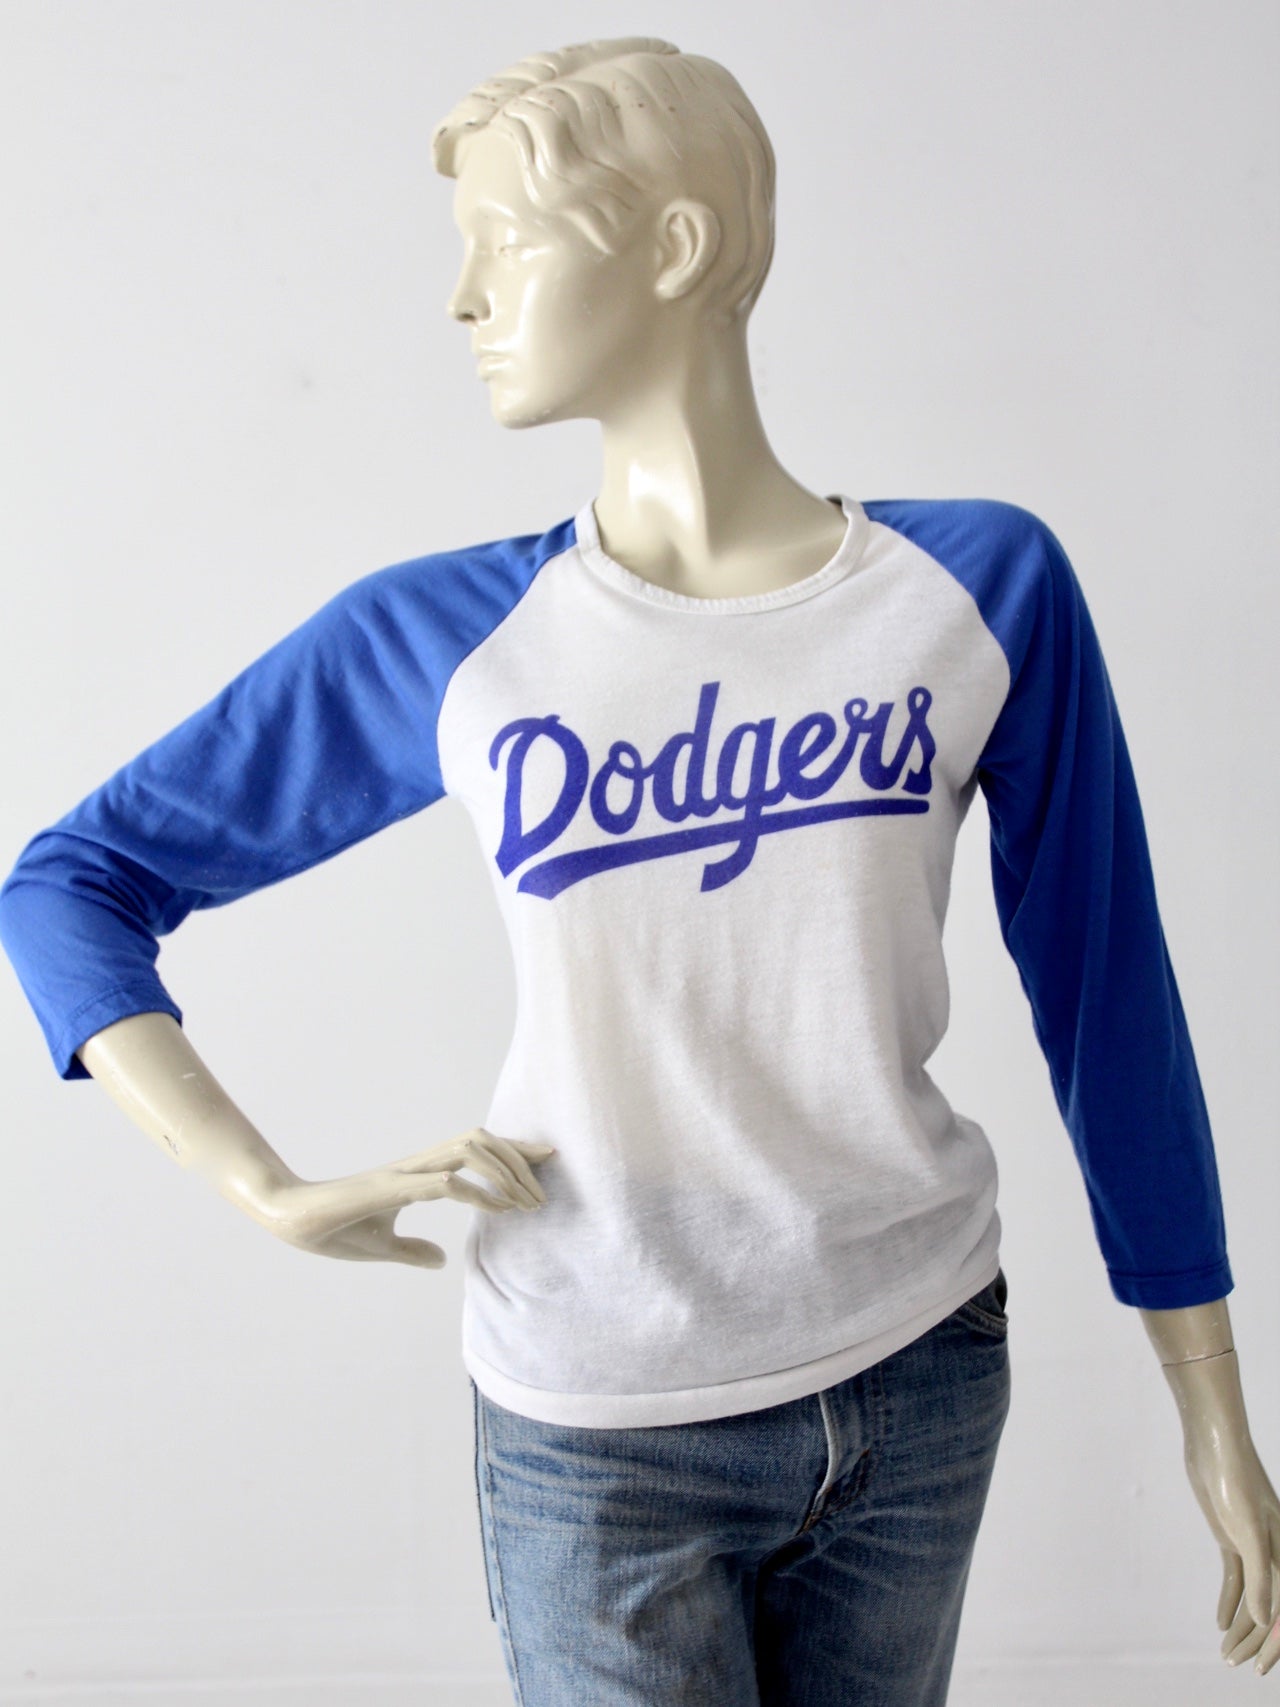  HONTOUTE Women's Baseball Graphic T-Shirts Dodger